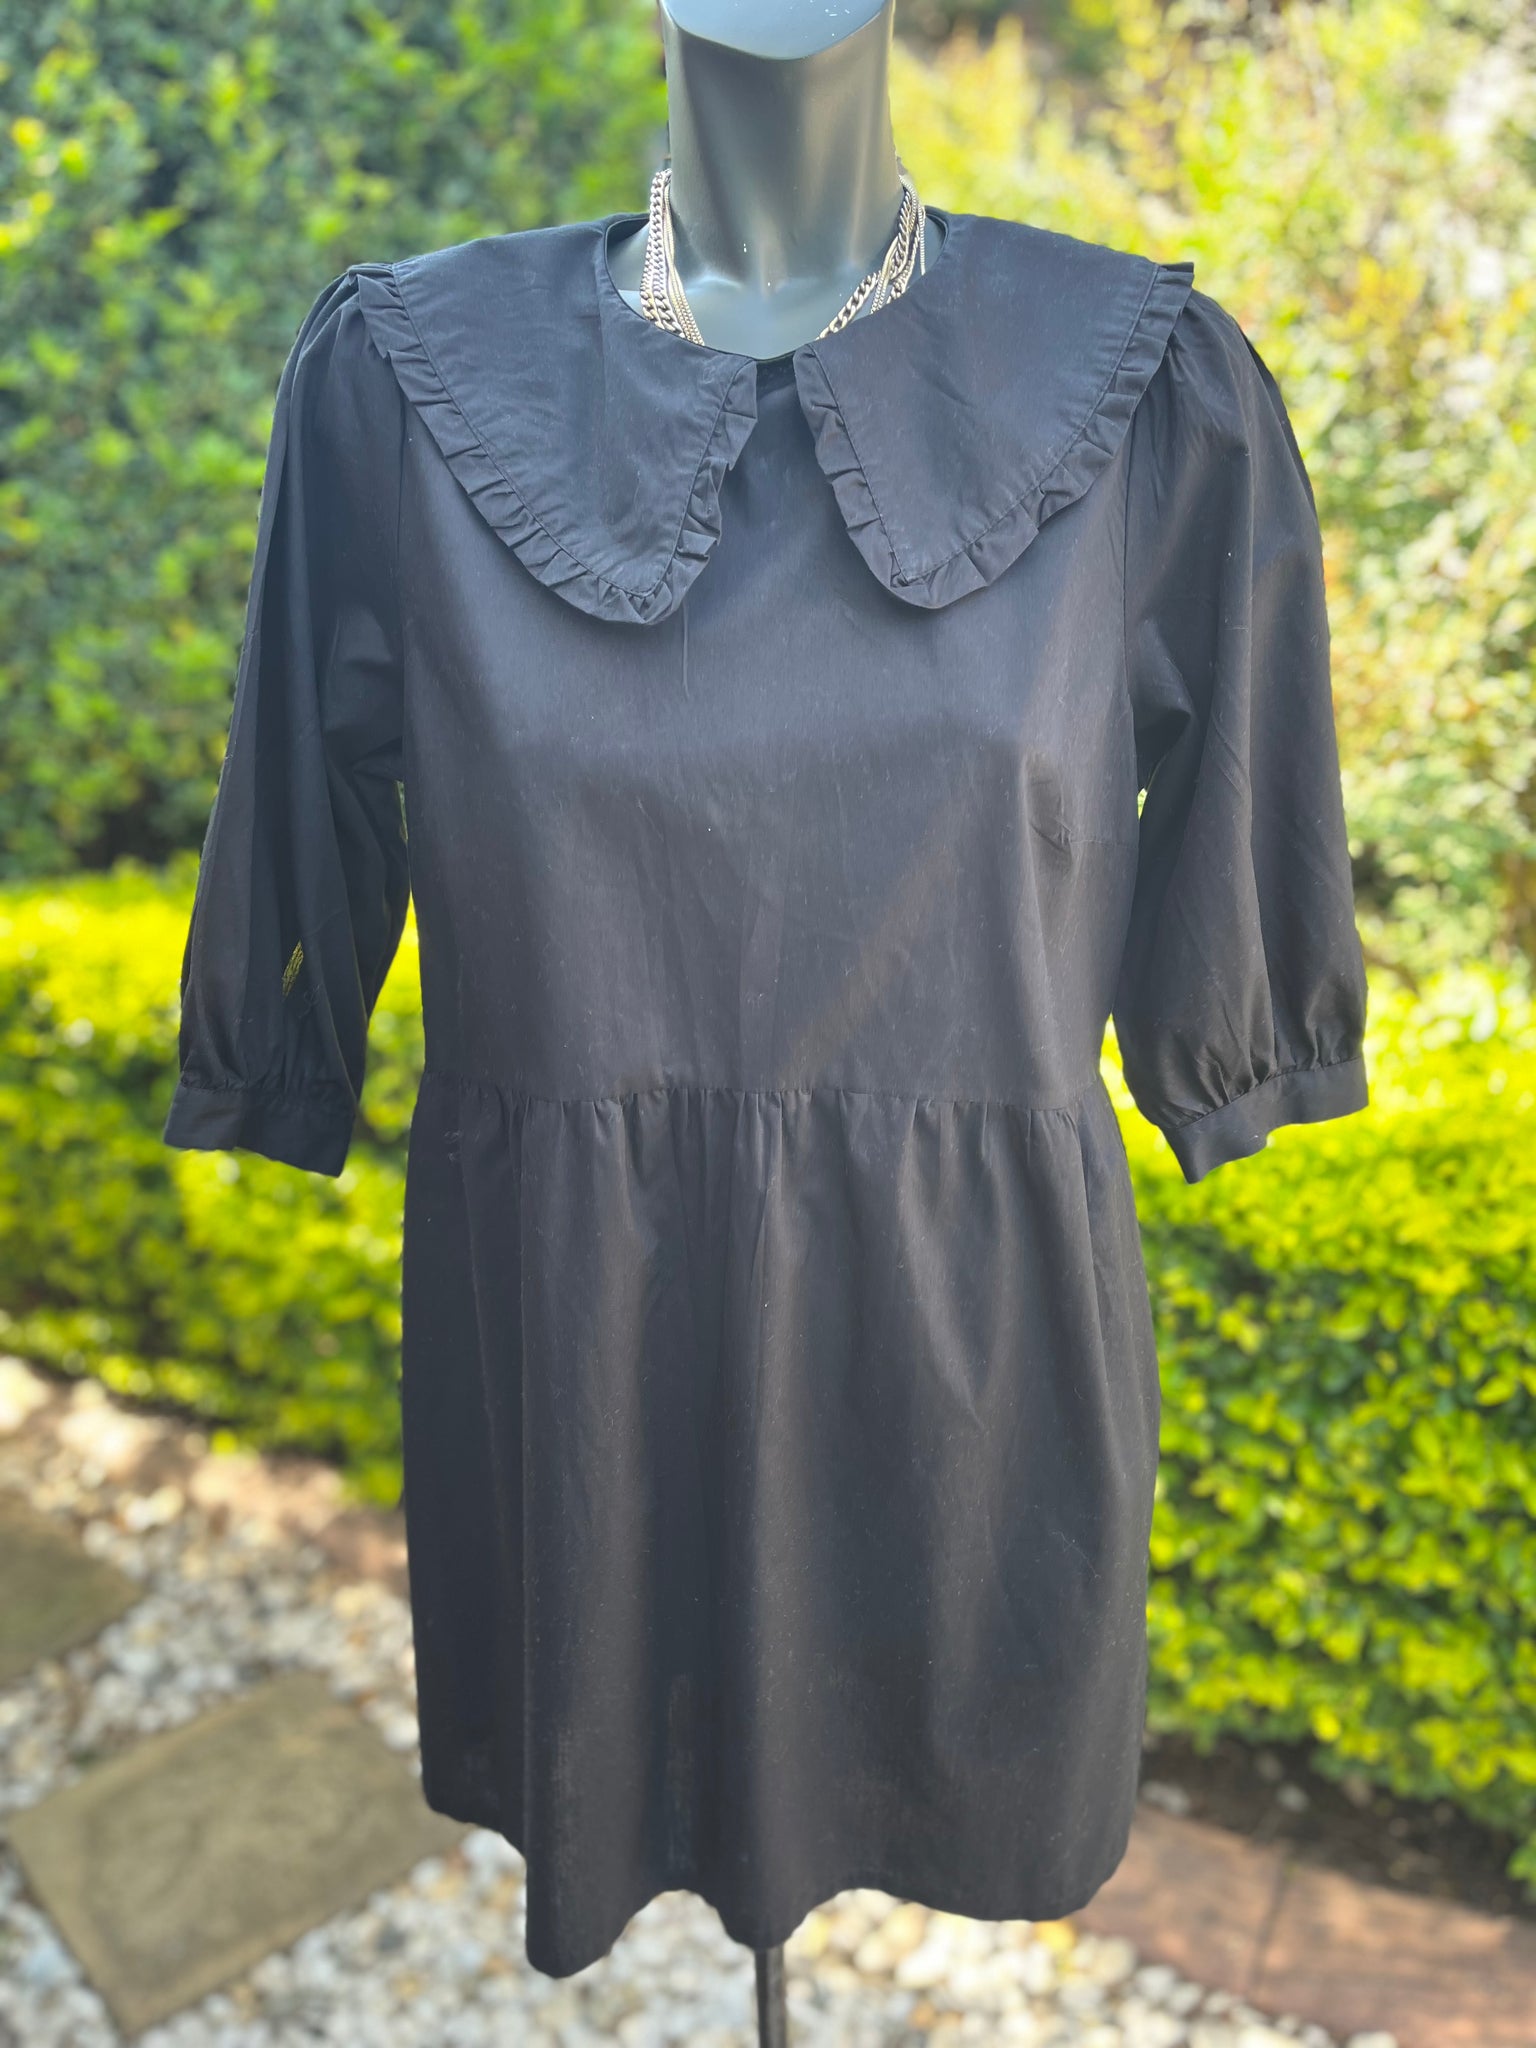 H&M Black Babydoll Dress - Size Medium